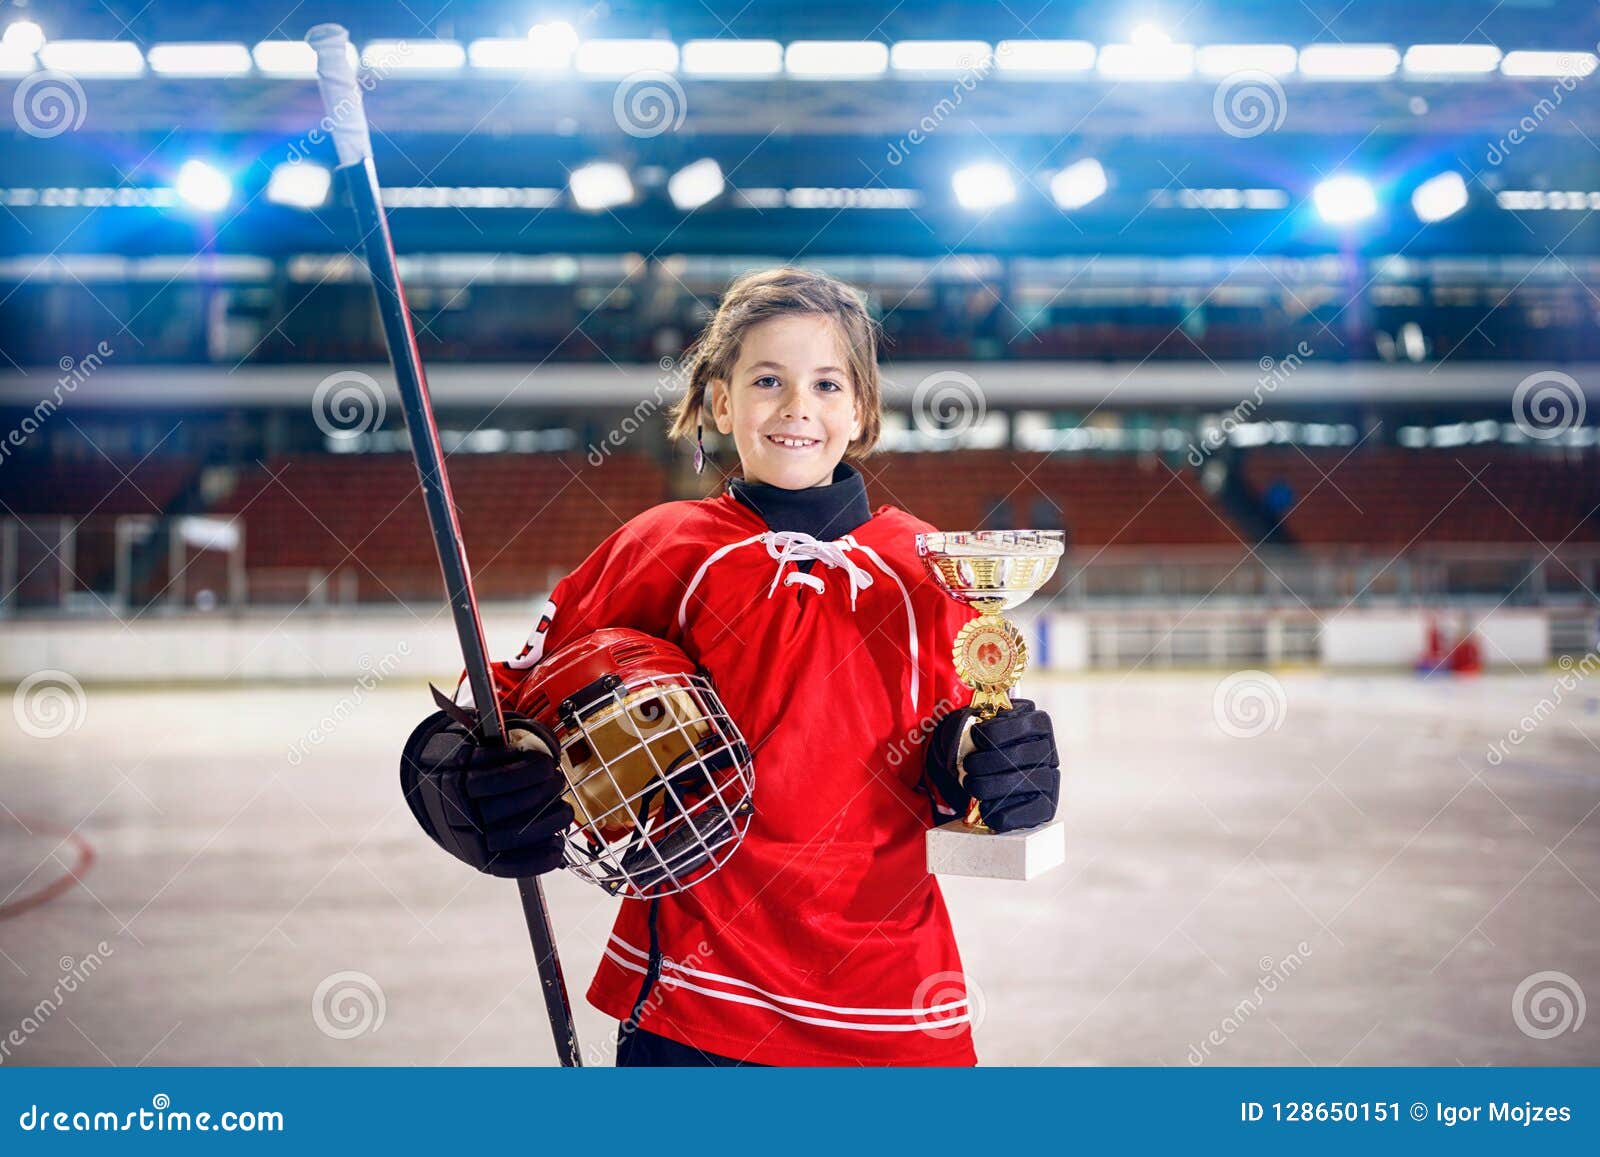 happy girl player ice hockey winner trophy